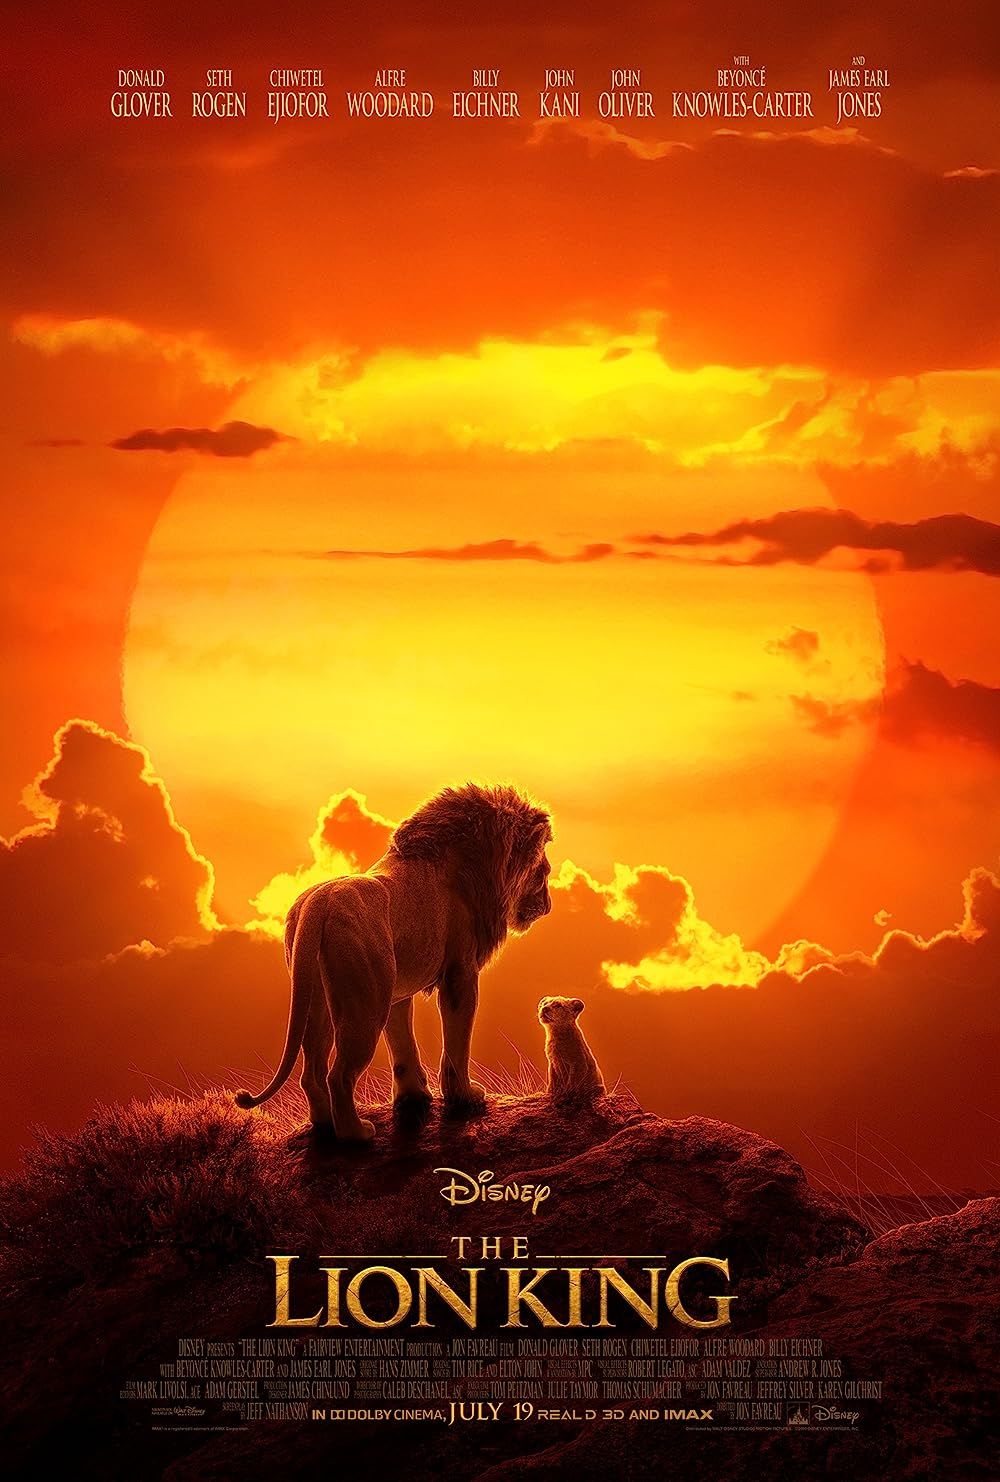 Mufasa and Simba on The Lion King 2019 Poster